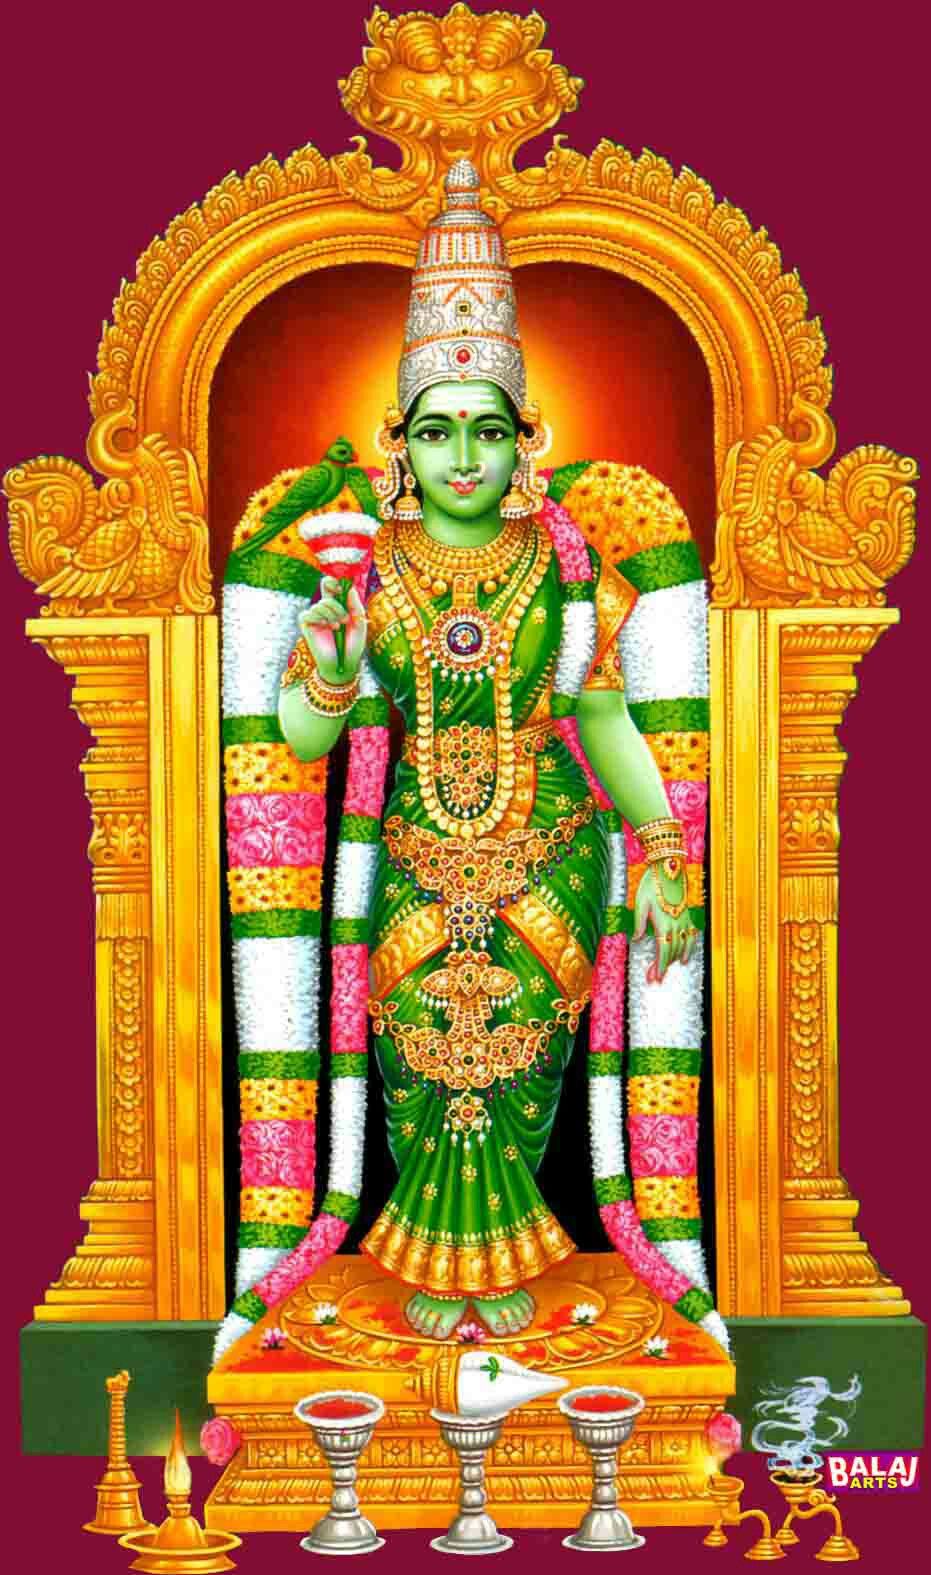 Goddess Madurai Meenakshi Amman Image & Wallpaper